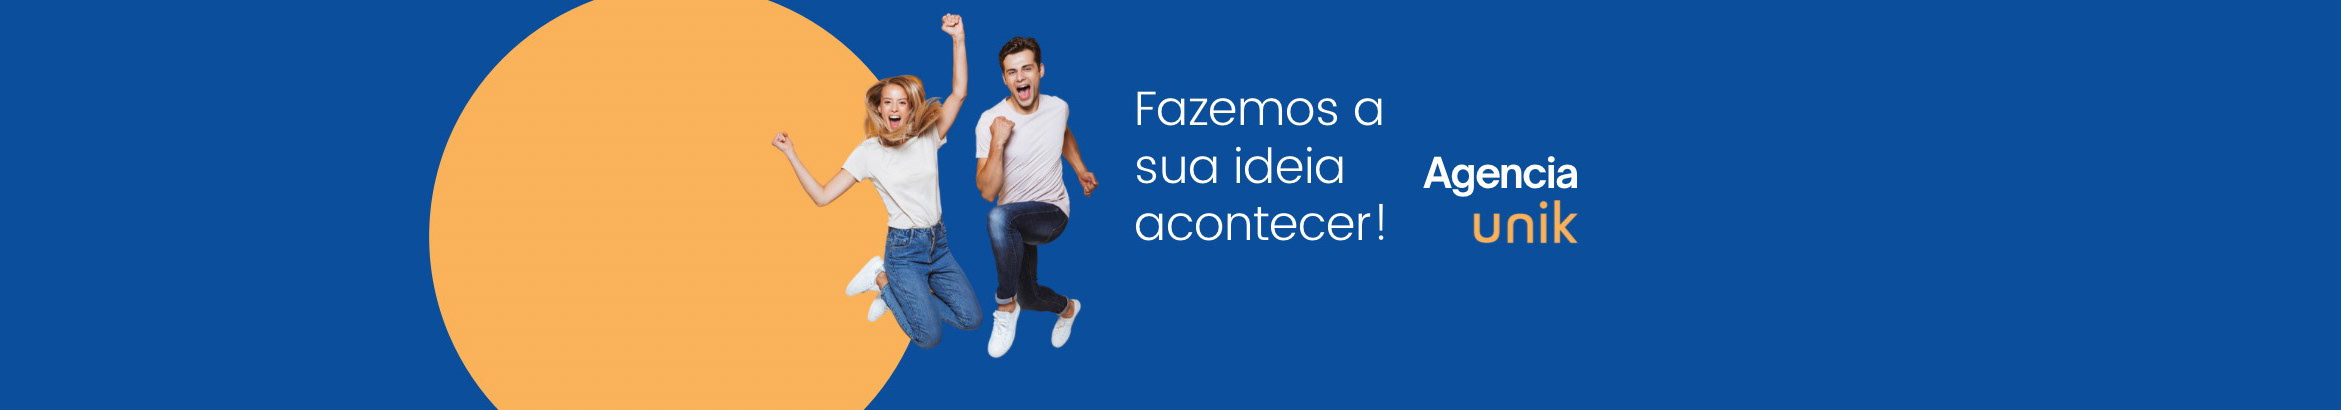 Banner de perfil de Agência Unik